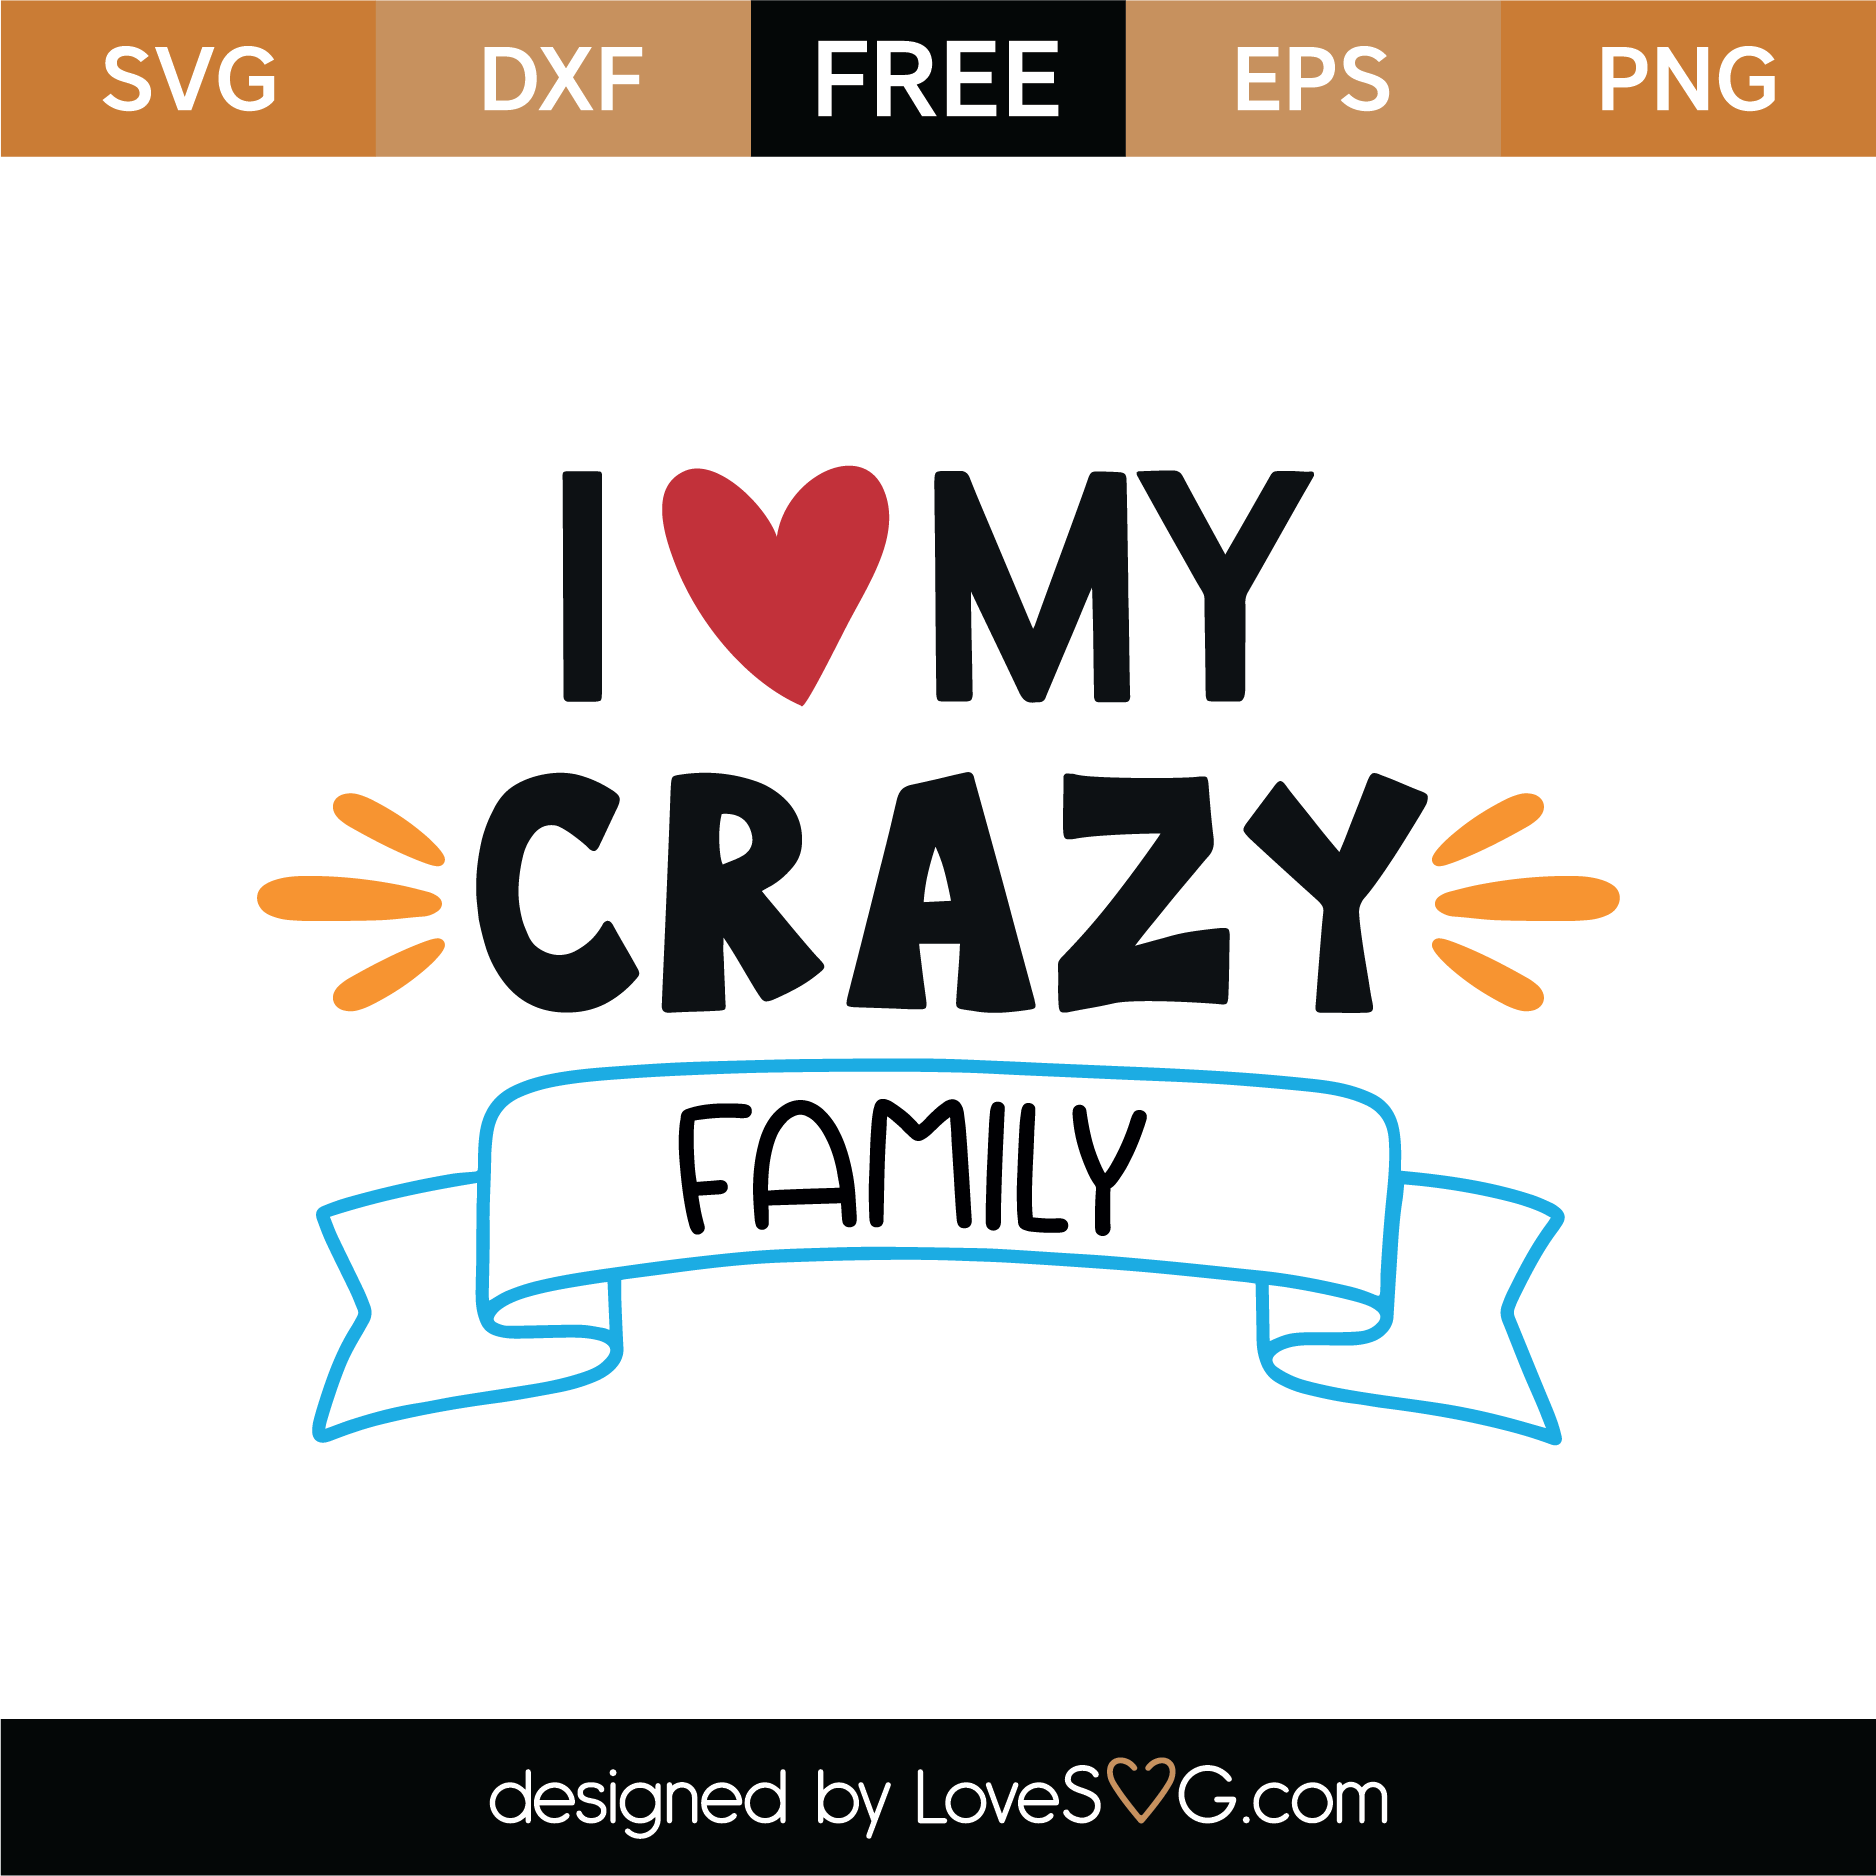 Download Free I Love My Crazy Family SVG Cut File | Lovesvg.com